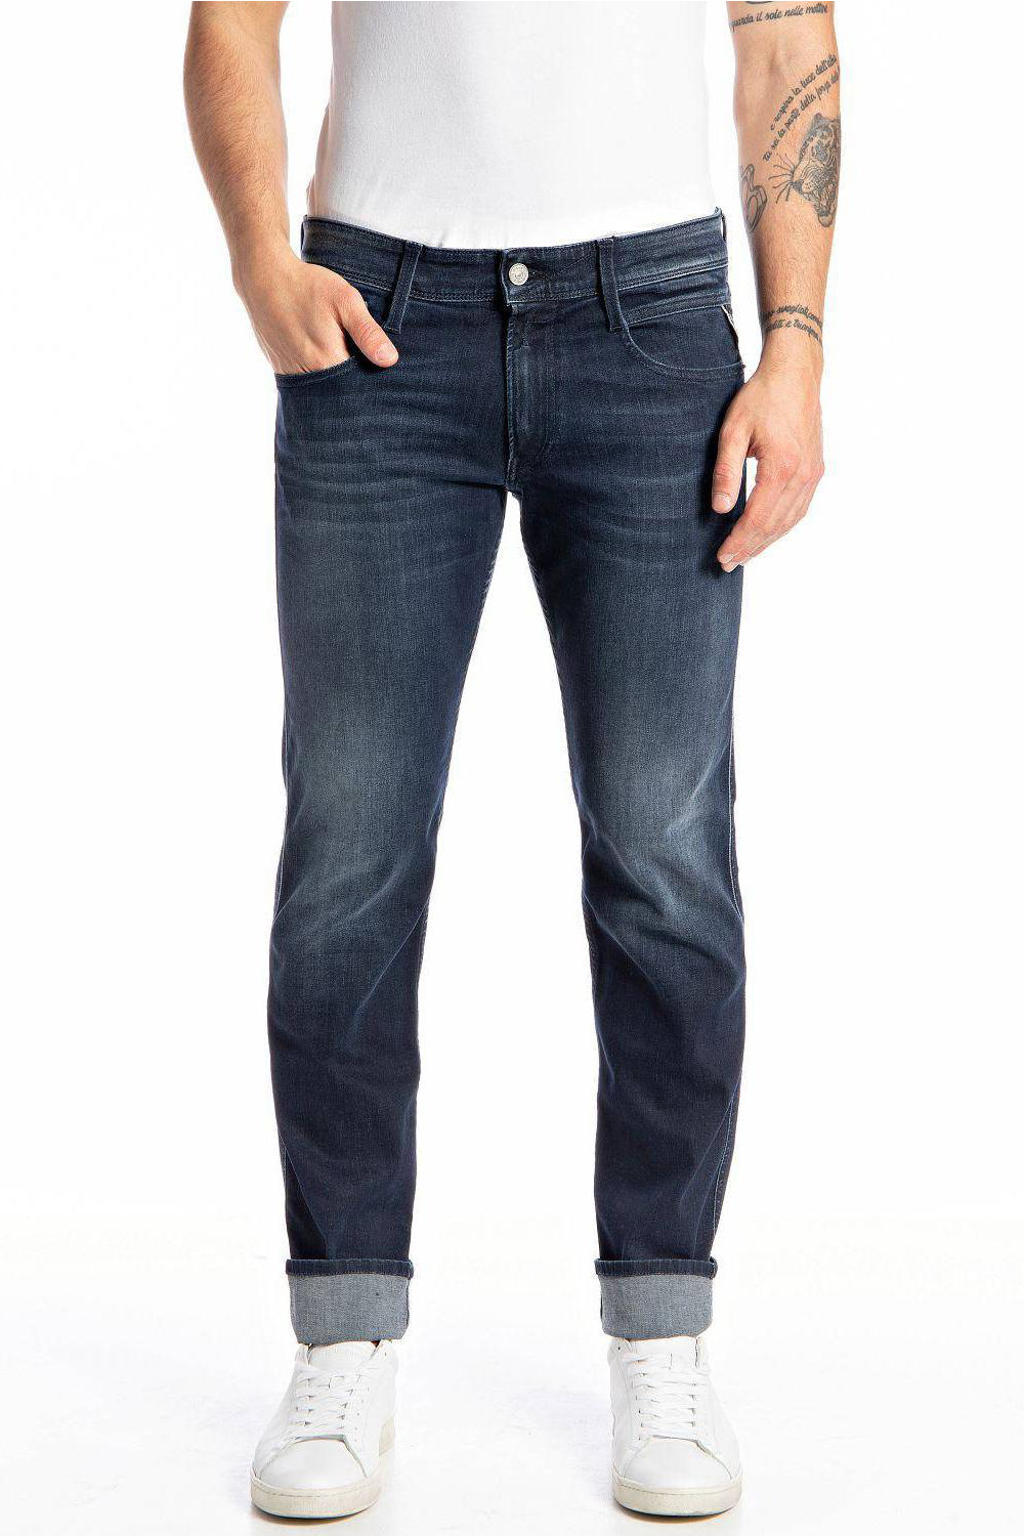 REPLAY slim fit jeans ANBASS dark blue